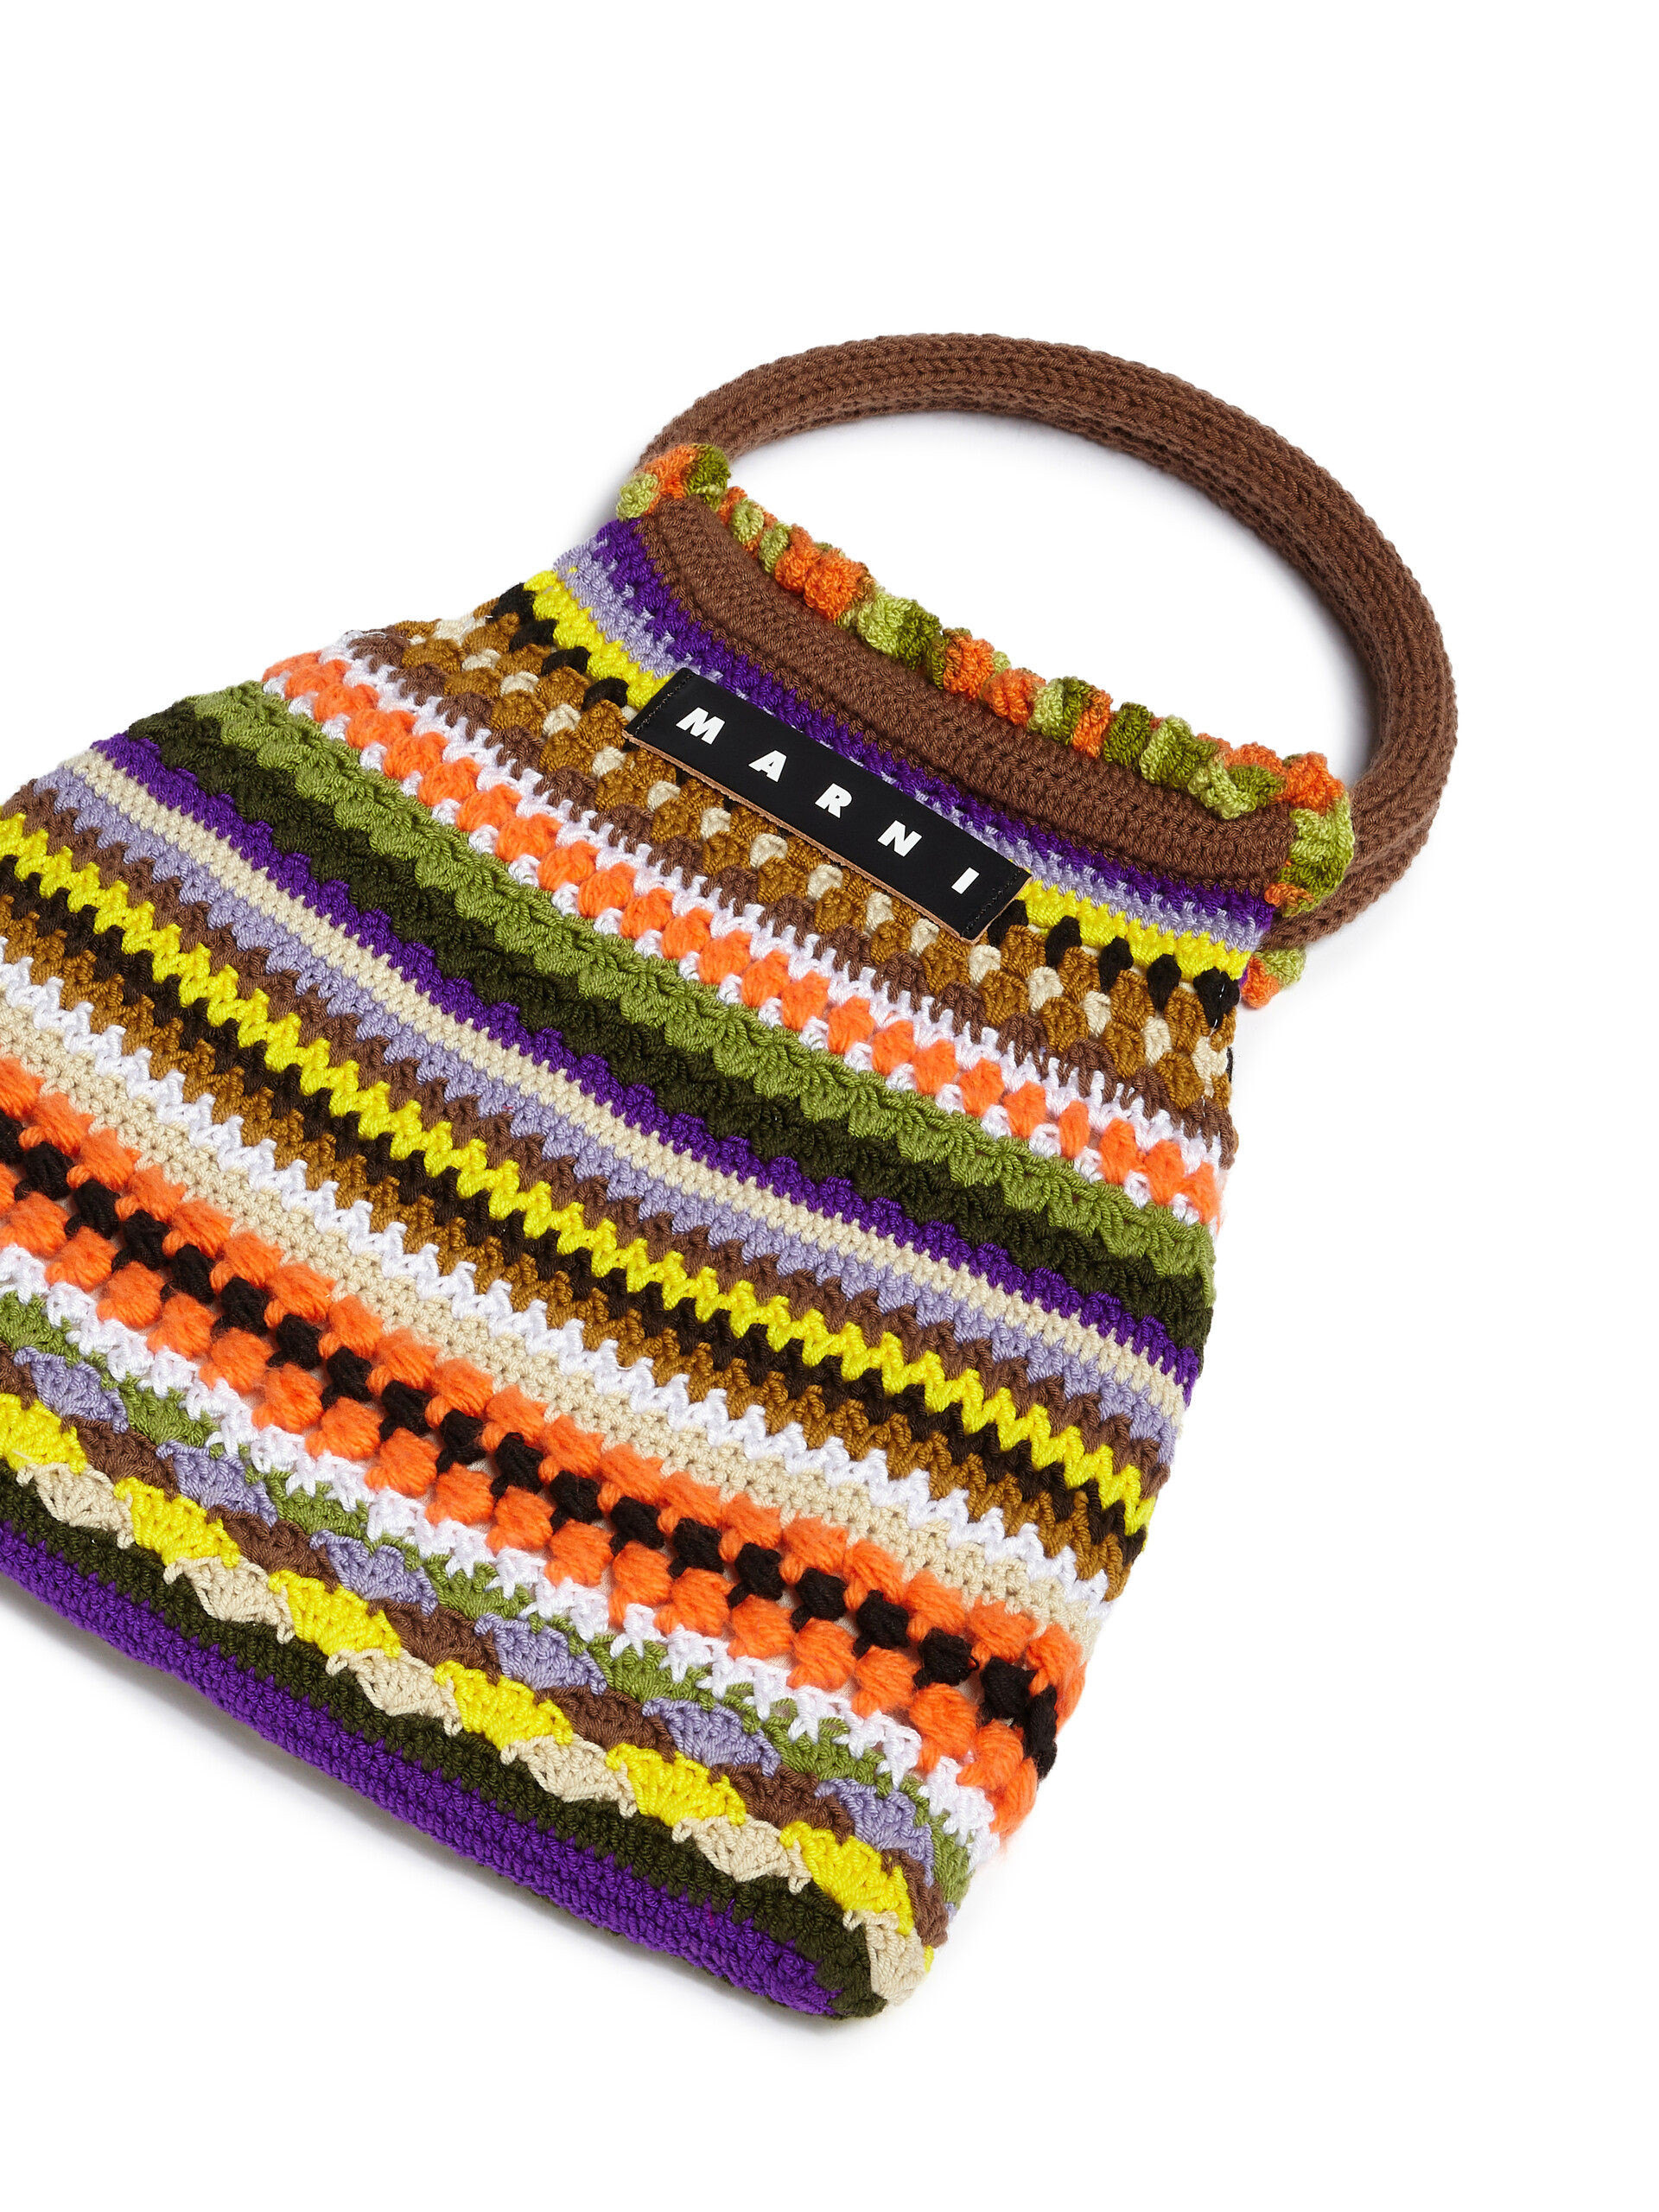 MARNI MARKET GRANNY bag in brown crochet - Bags - Image 4